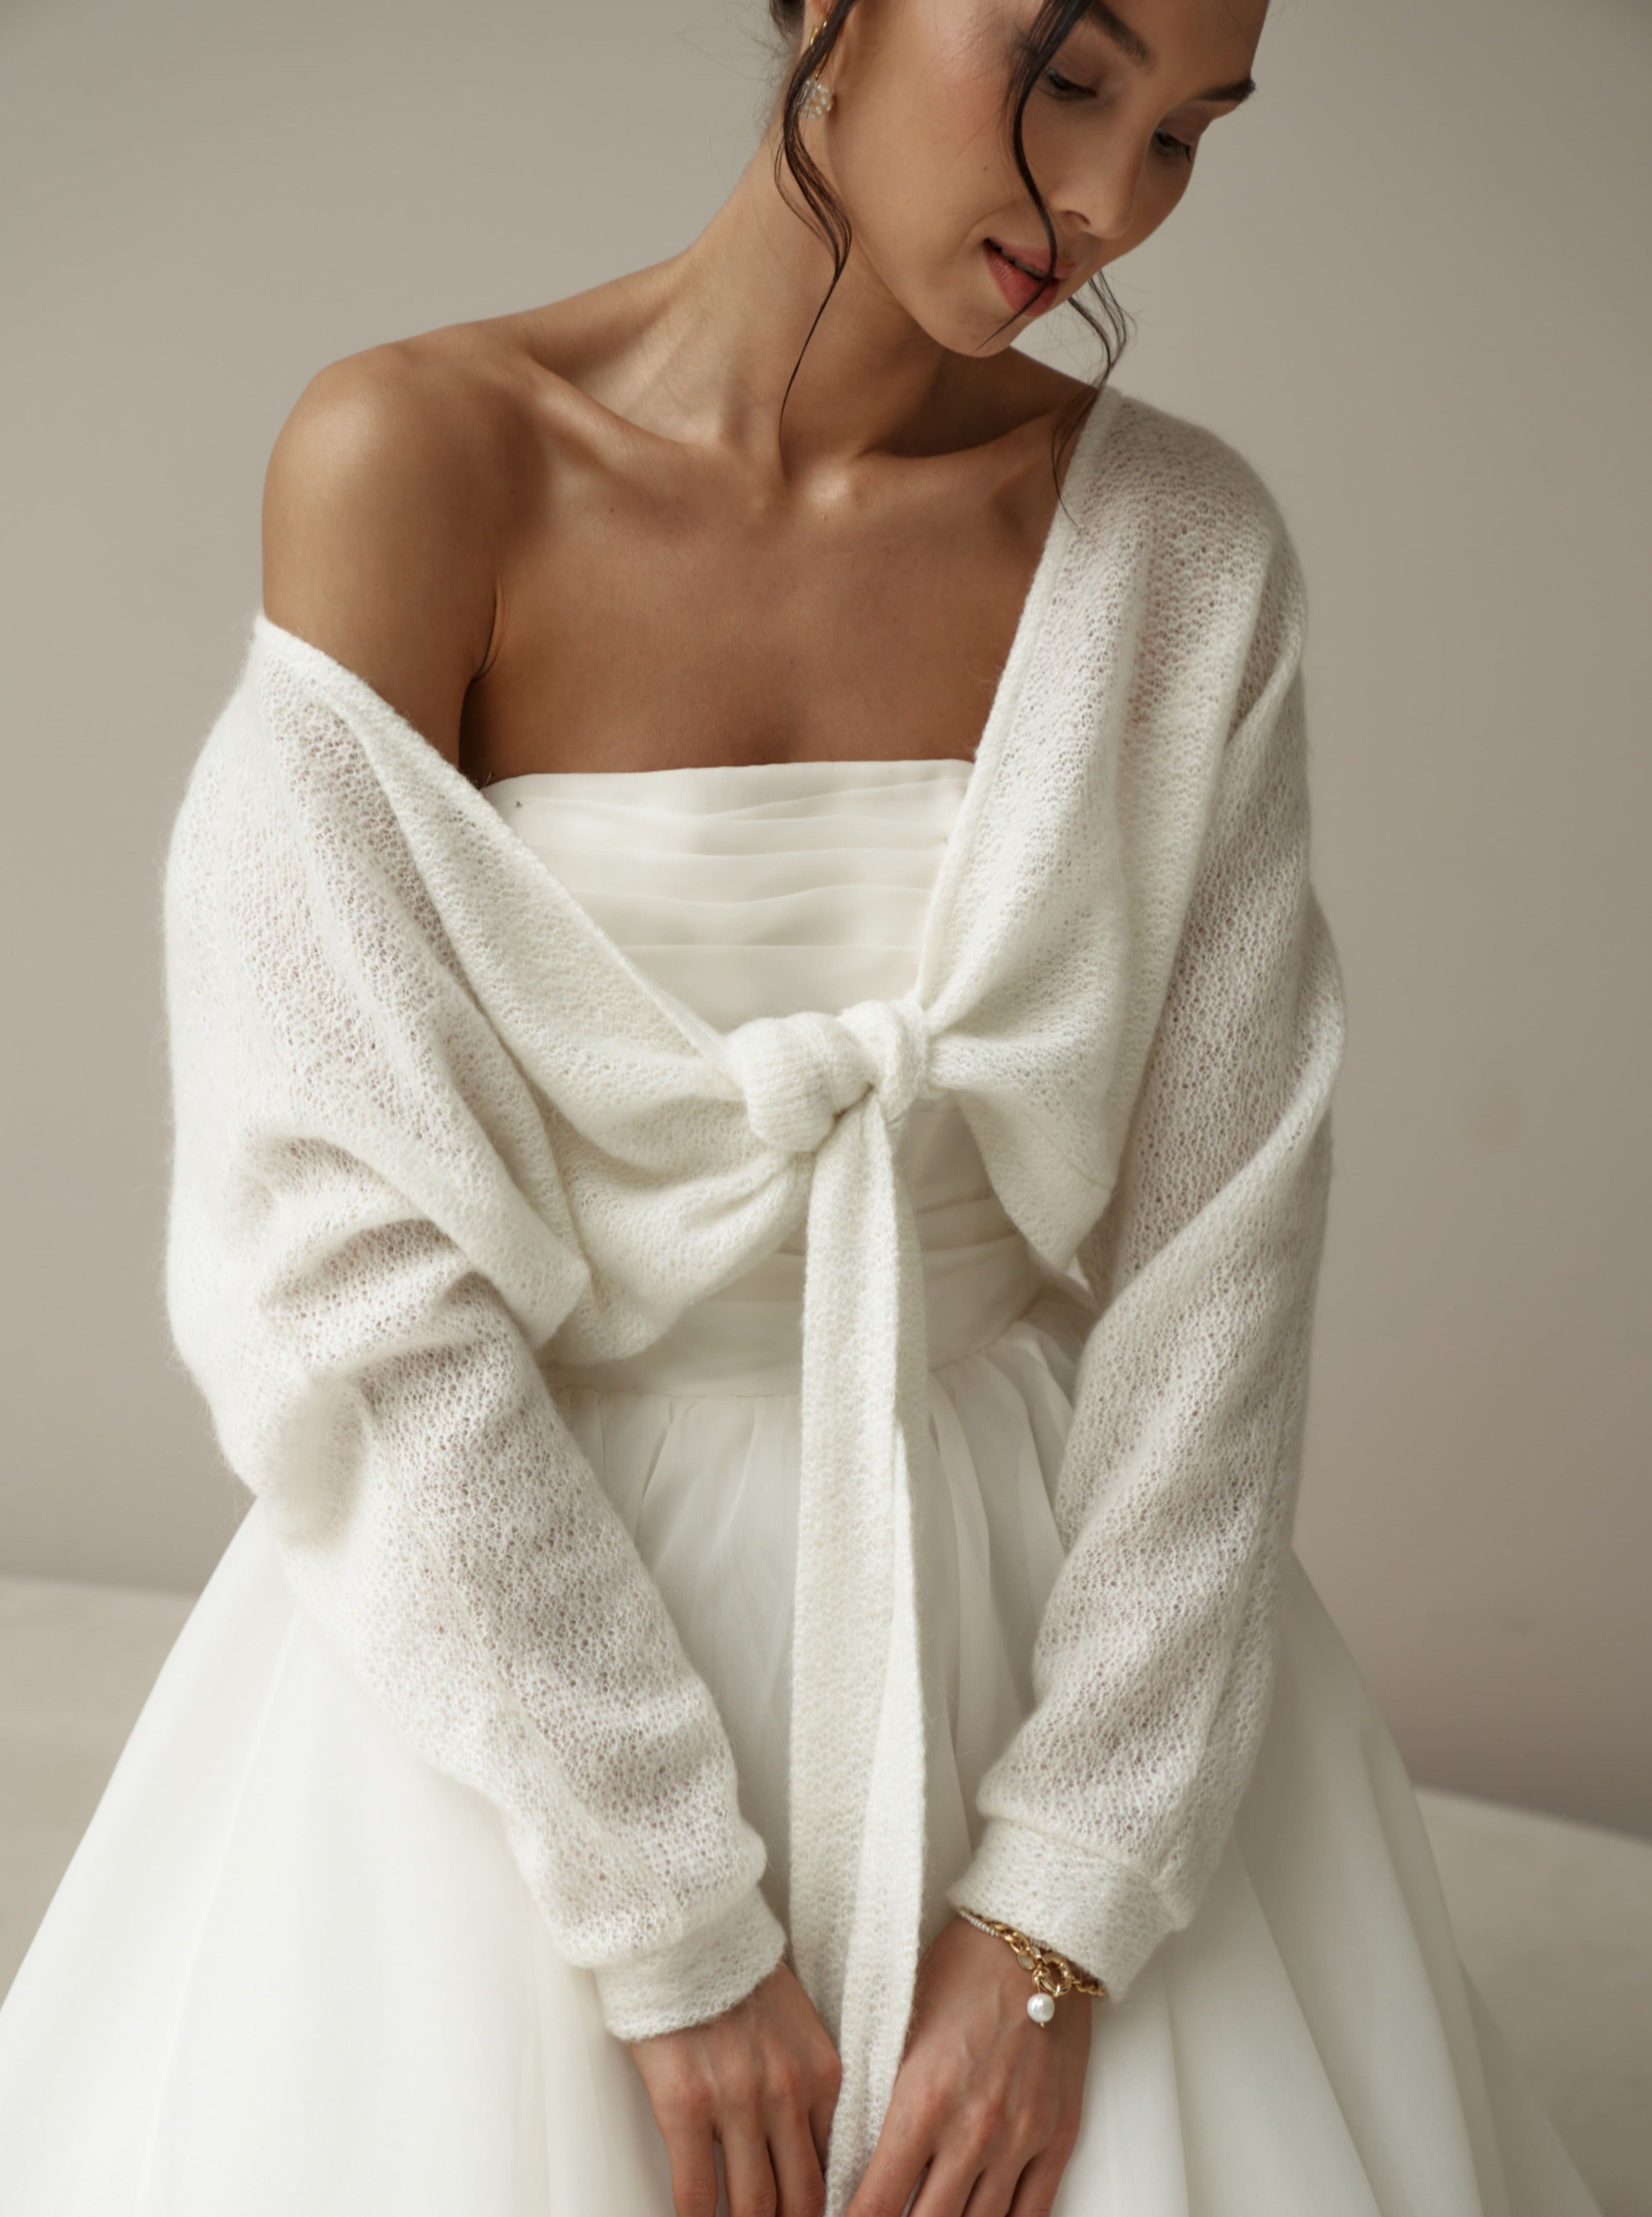 Bridal cardigan for wedding dress. Wool wedding sweater with ties